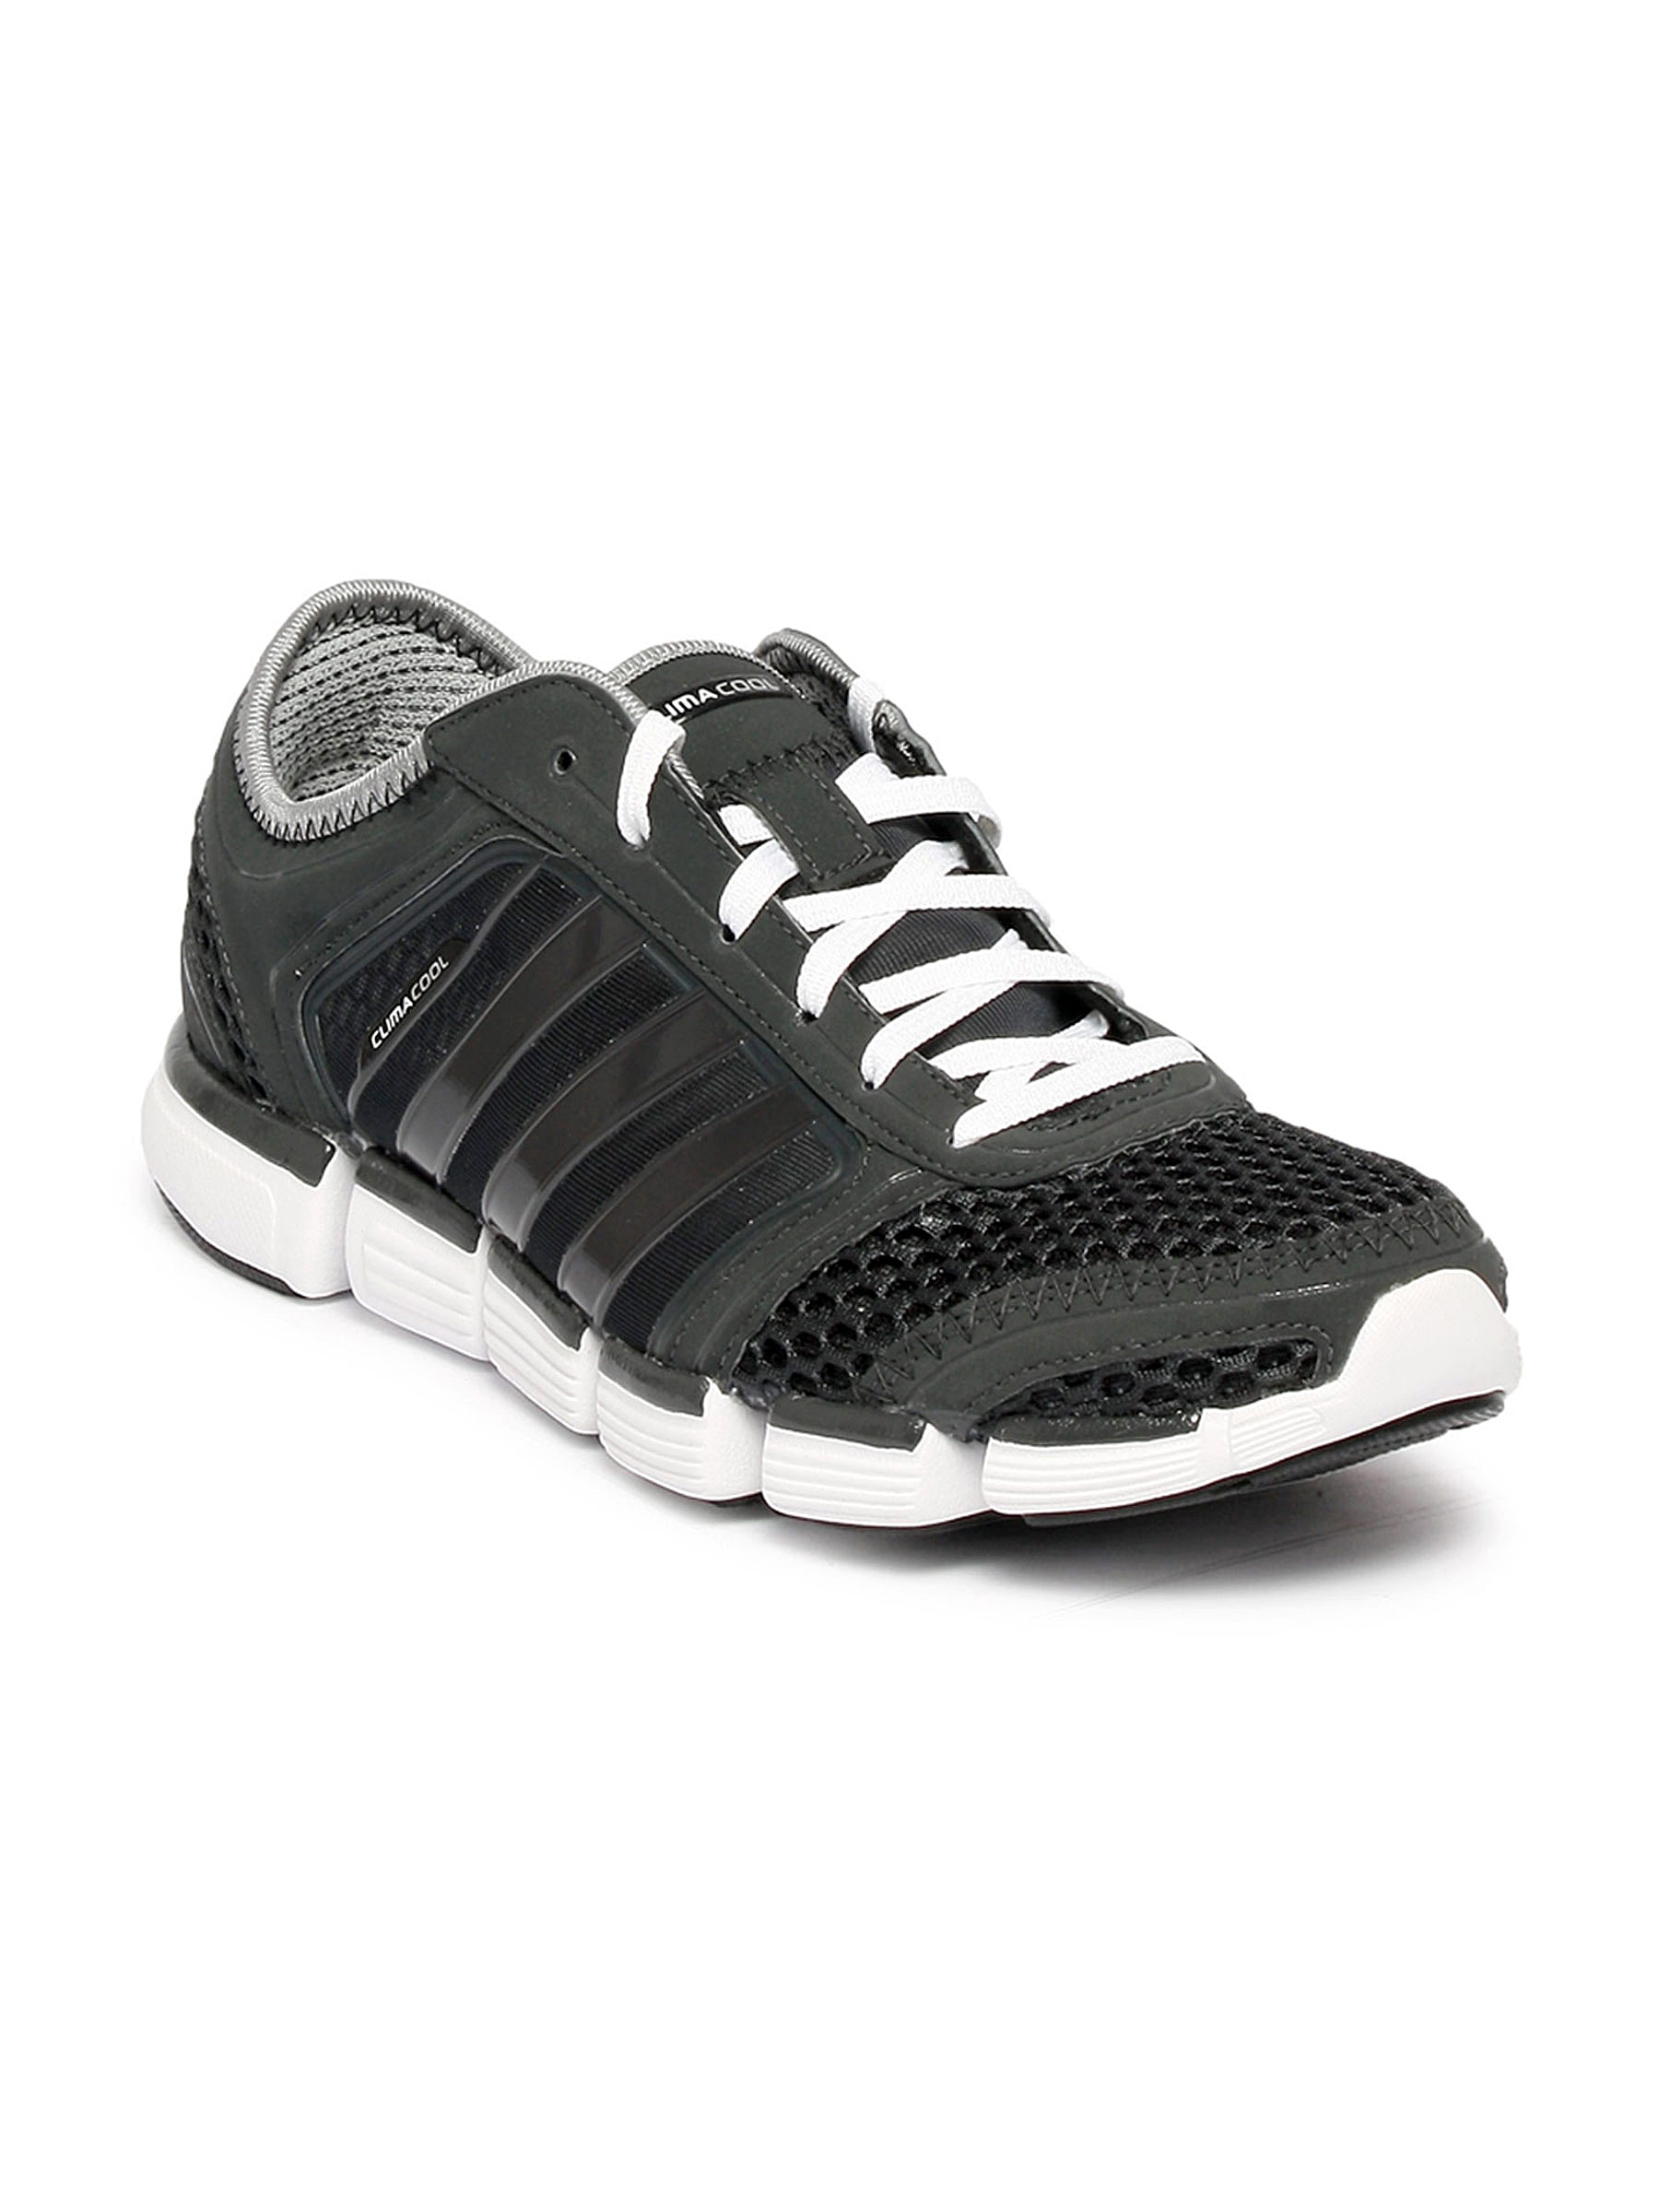 ADIDAS Black CC Oscillate M Sports Shoe